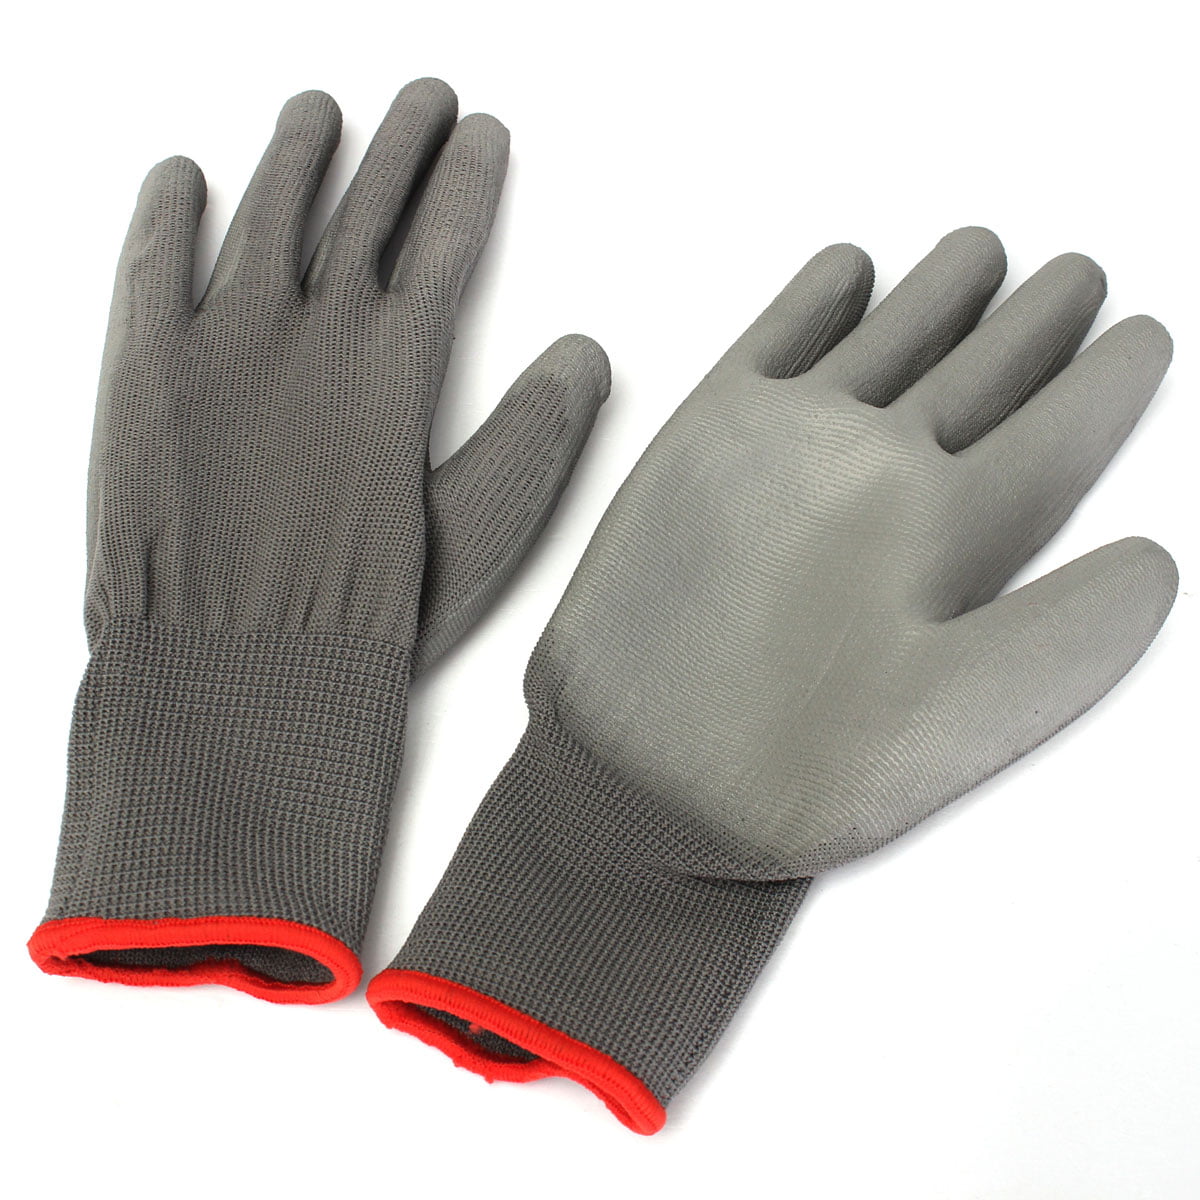 PU Palm Coated Precision Protective Anti Static Work Gloves S M L Multi Purpose 